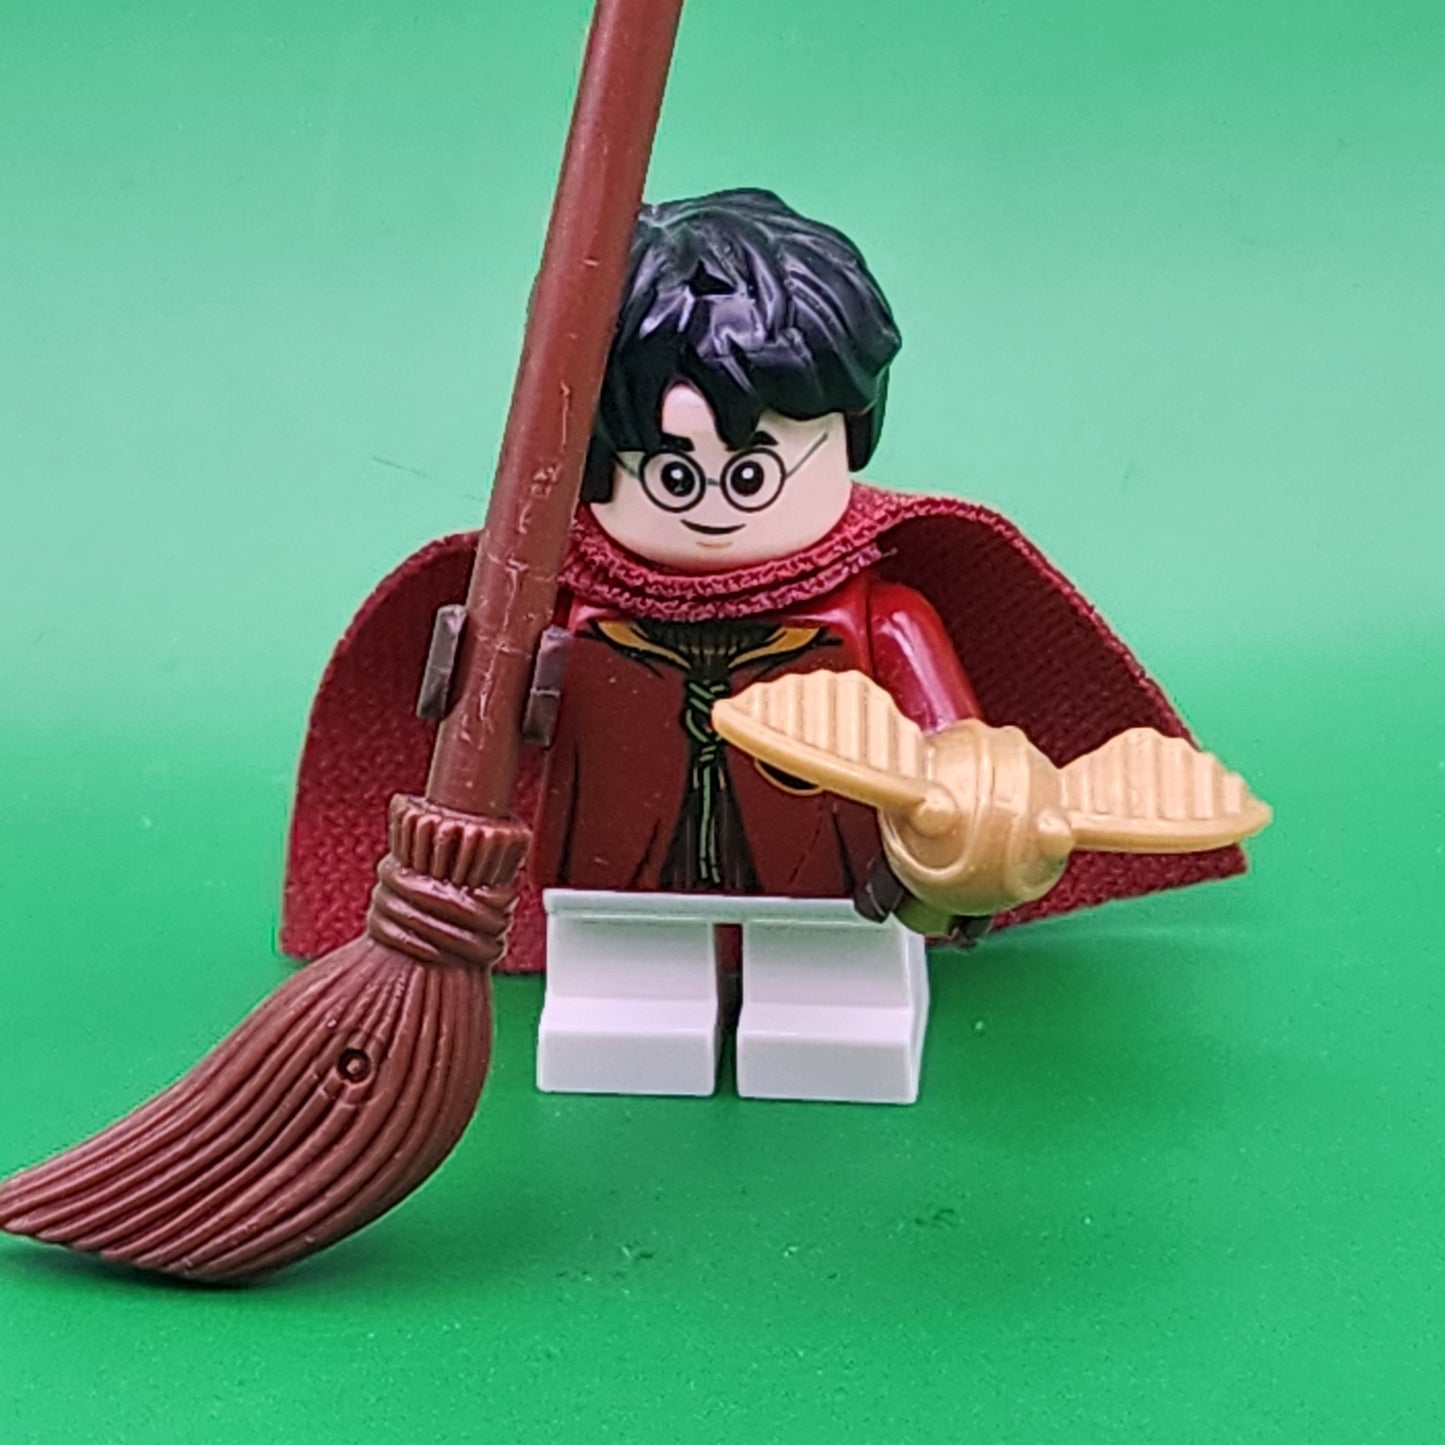 Lego Harry Potter Minifigure Quidditch Uniform hp138 Harry Potter